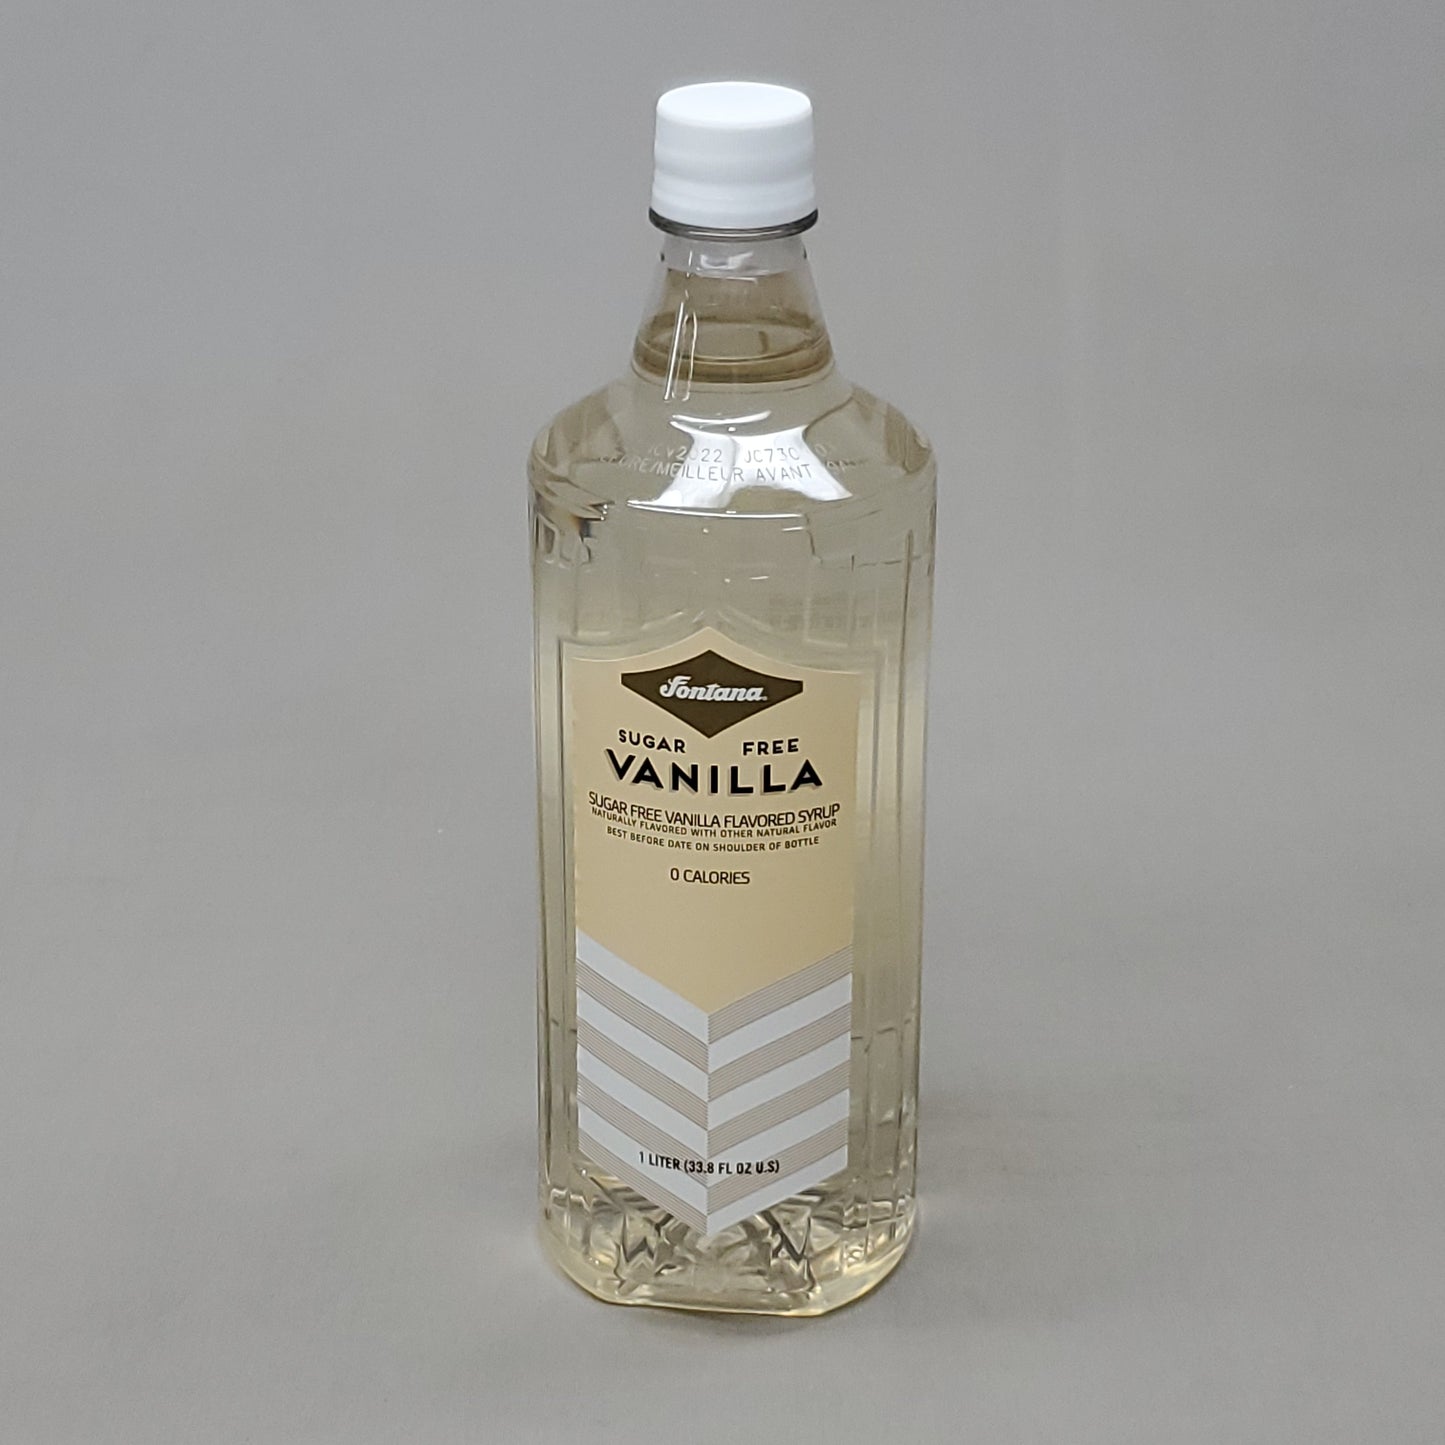 STARBUCKS (4 PACK) Sugar Free Vanilla Flavored Syrup 33.8 fl oz/bottle BB 04/24 (AS-IS)